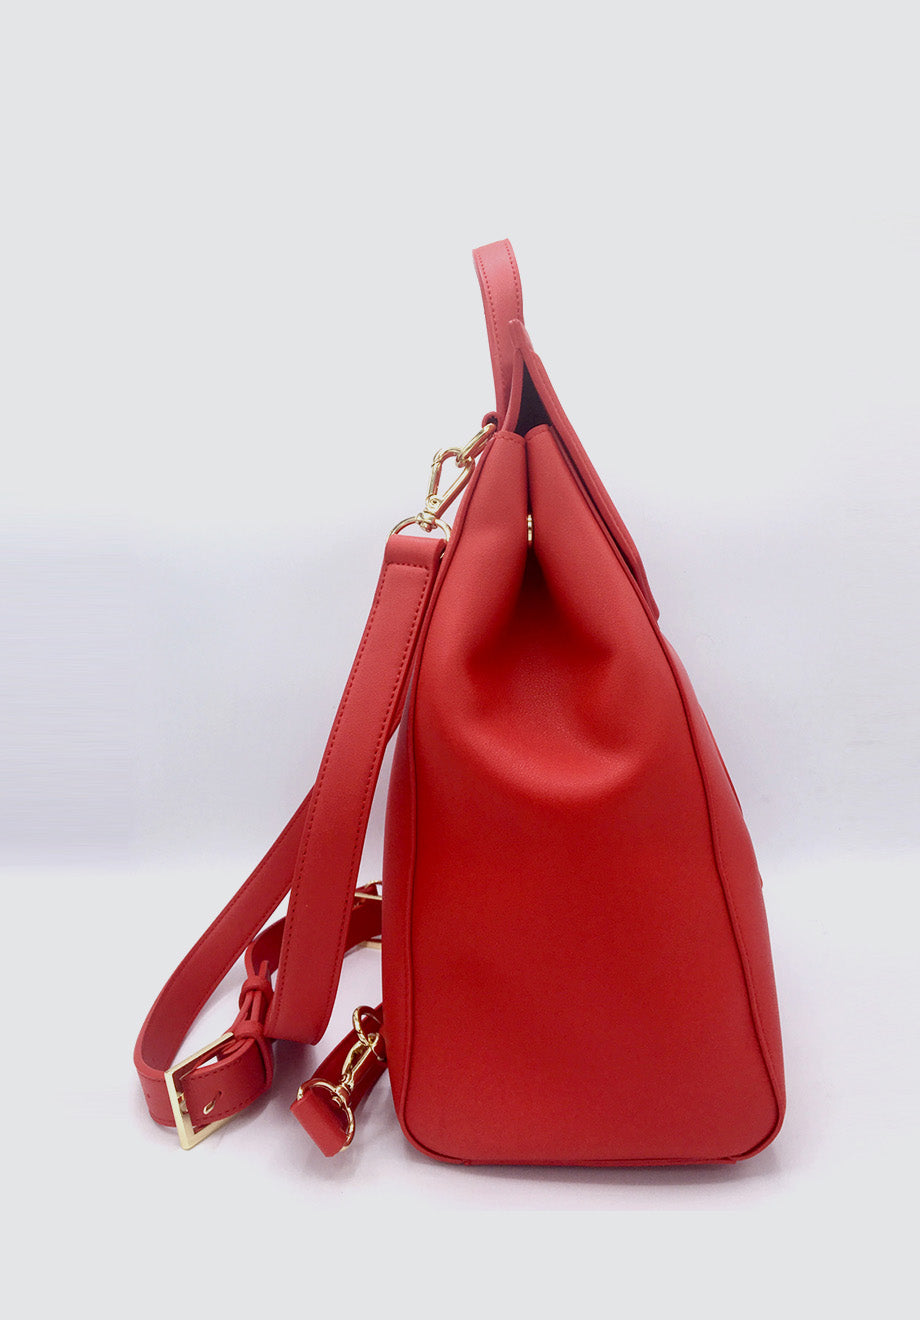 Livia | Red Vegan Leather Backpack